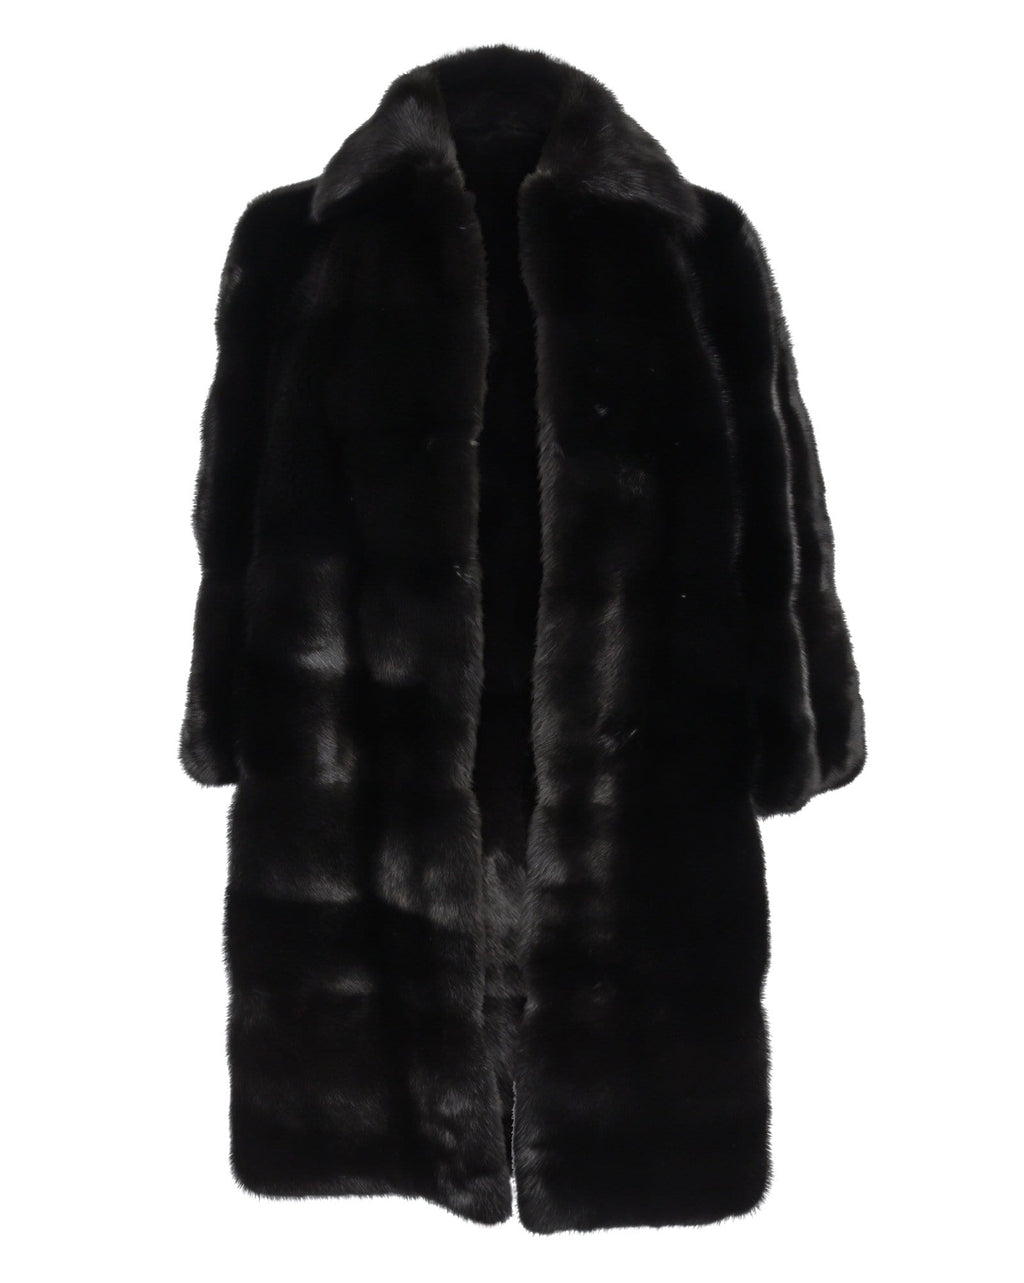 Gucci Coat Black Glossy Mink 3/4 Sleeve Knee Length 42 / Fits 6 to 8 N ...